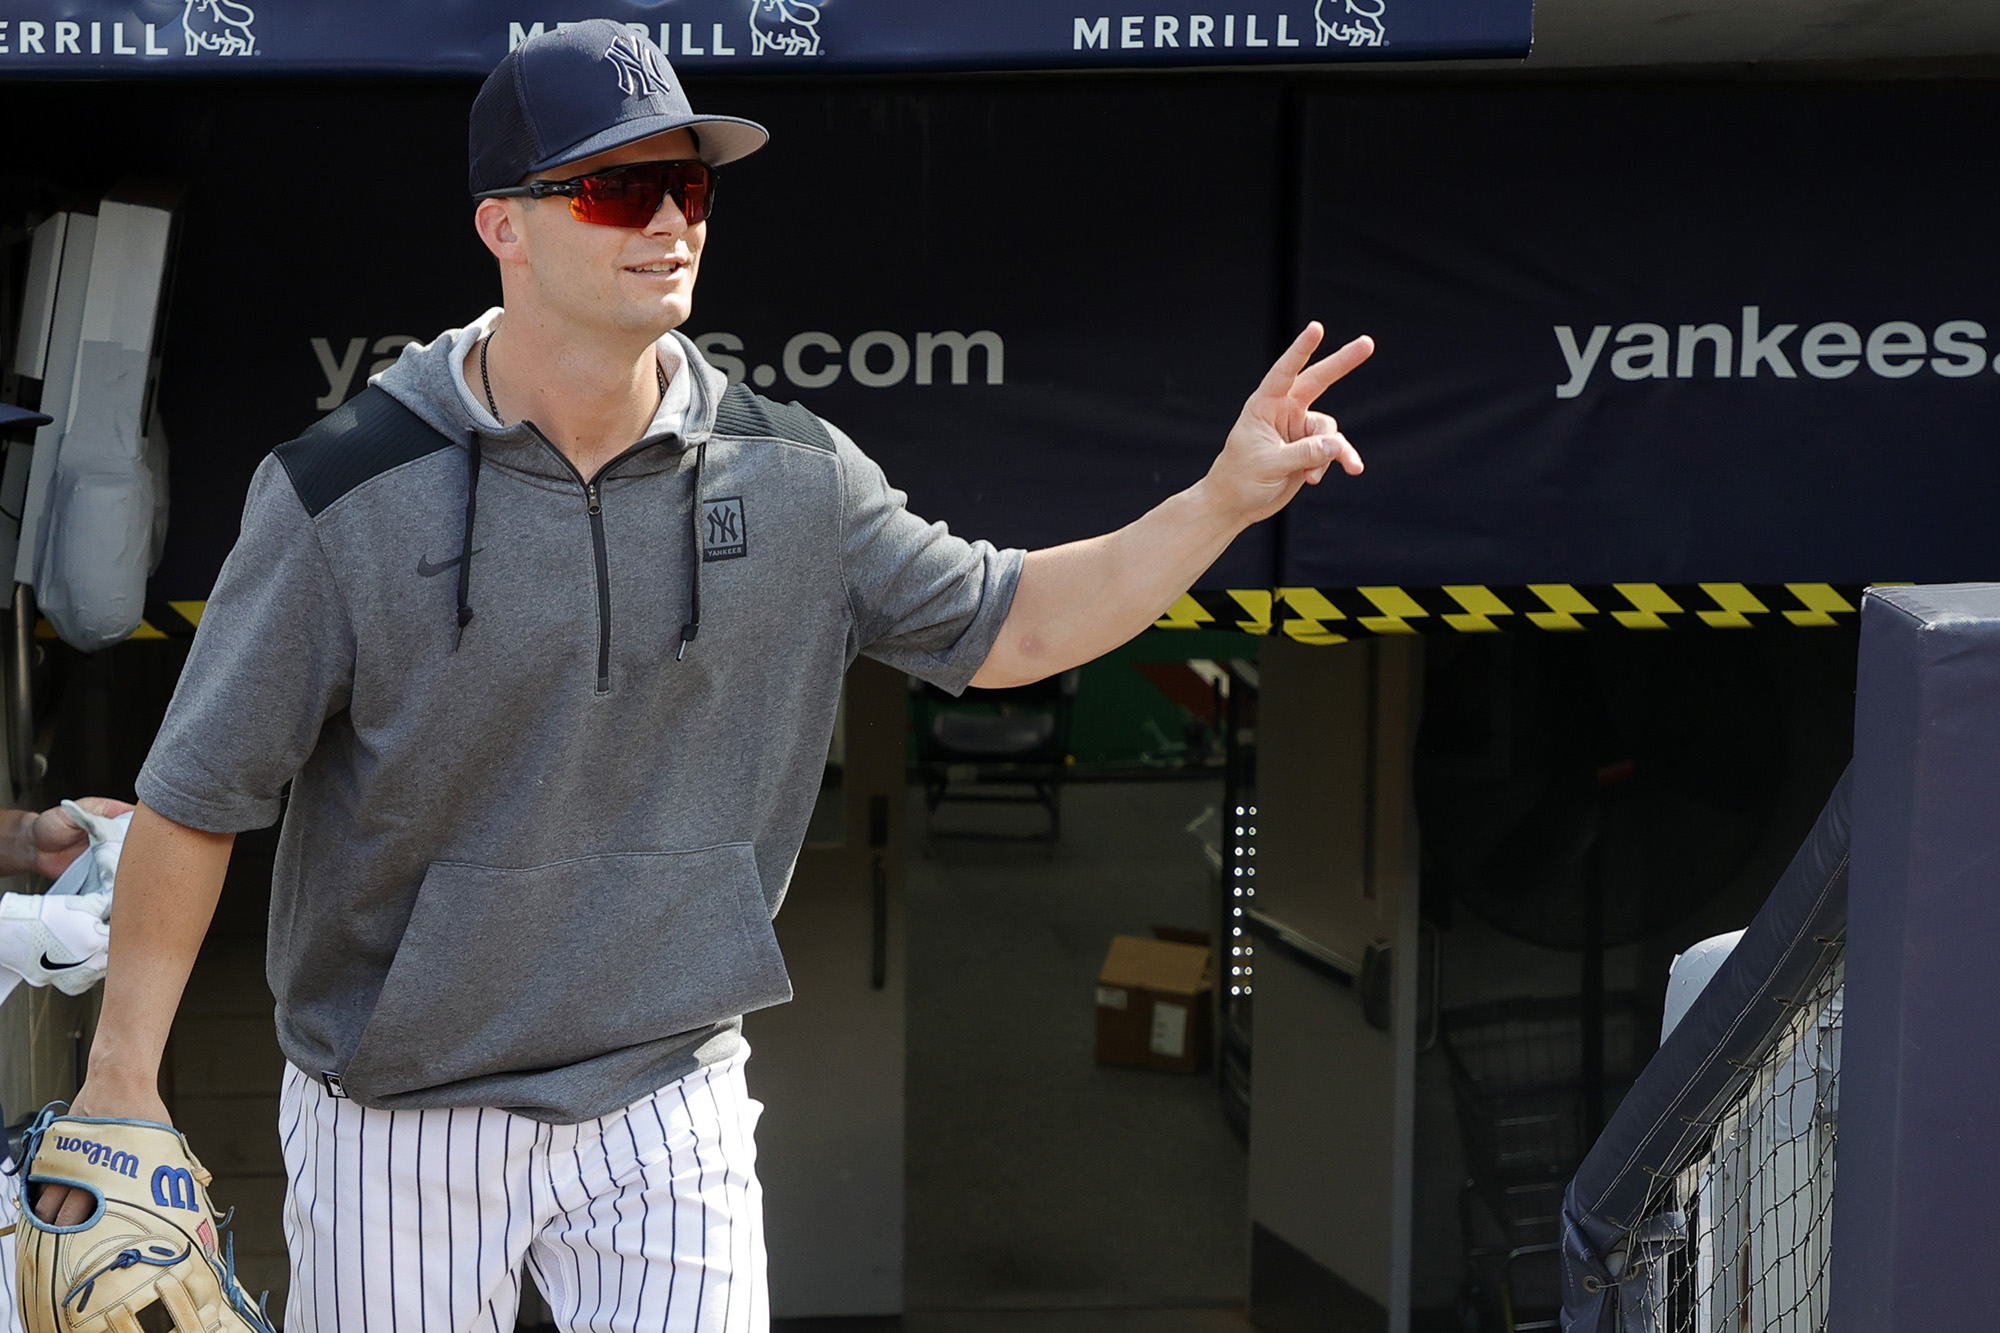 What Andrew Benintendi brings to the Yankees